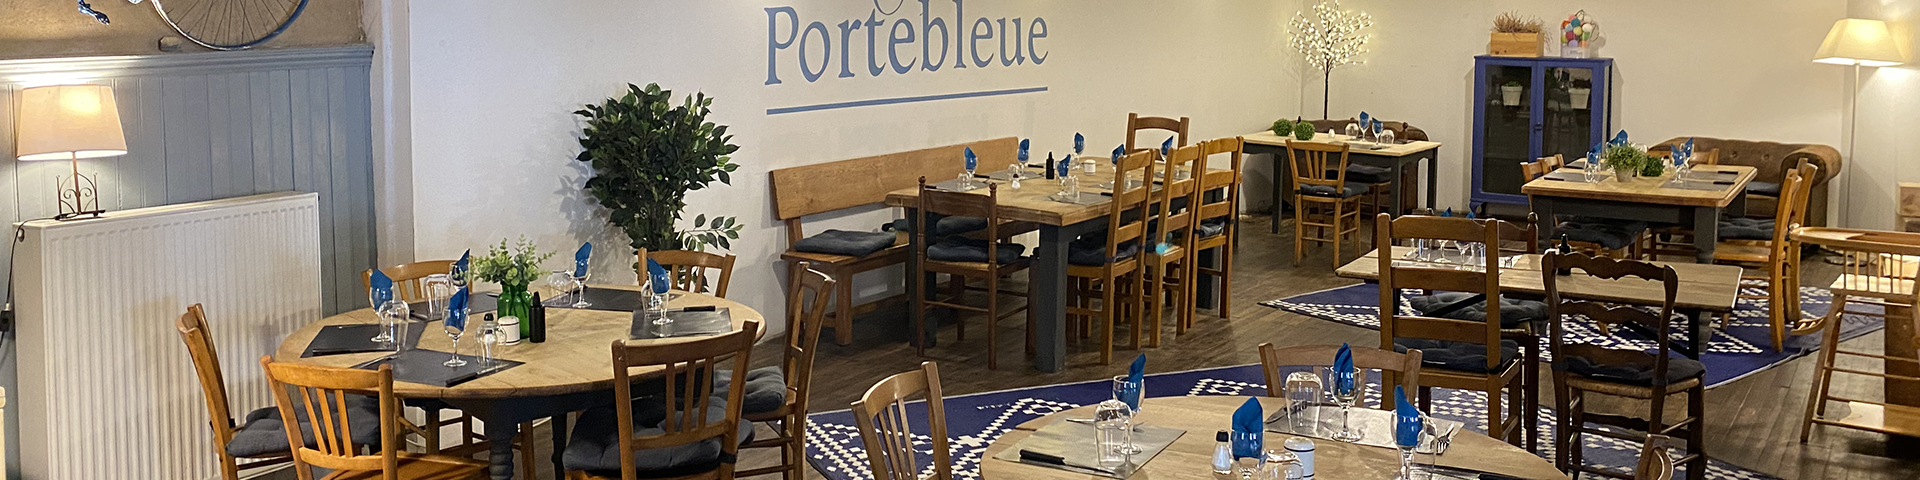 Cafe Portebleue France